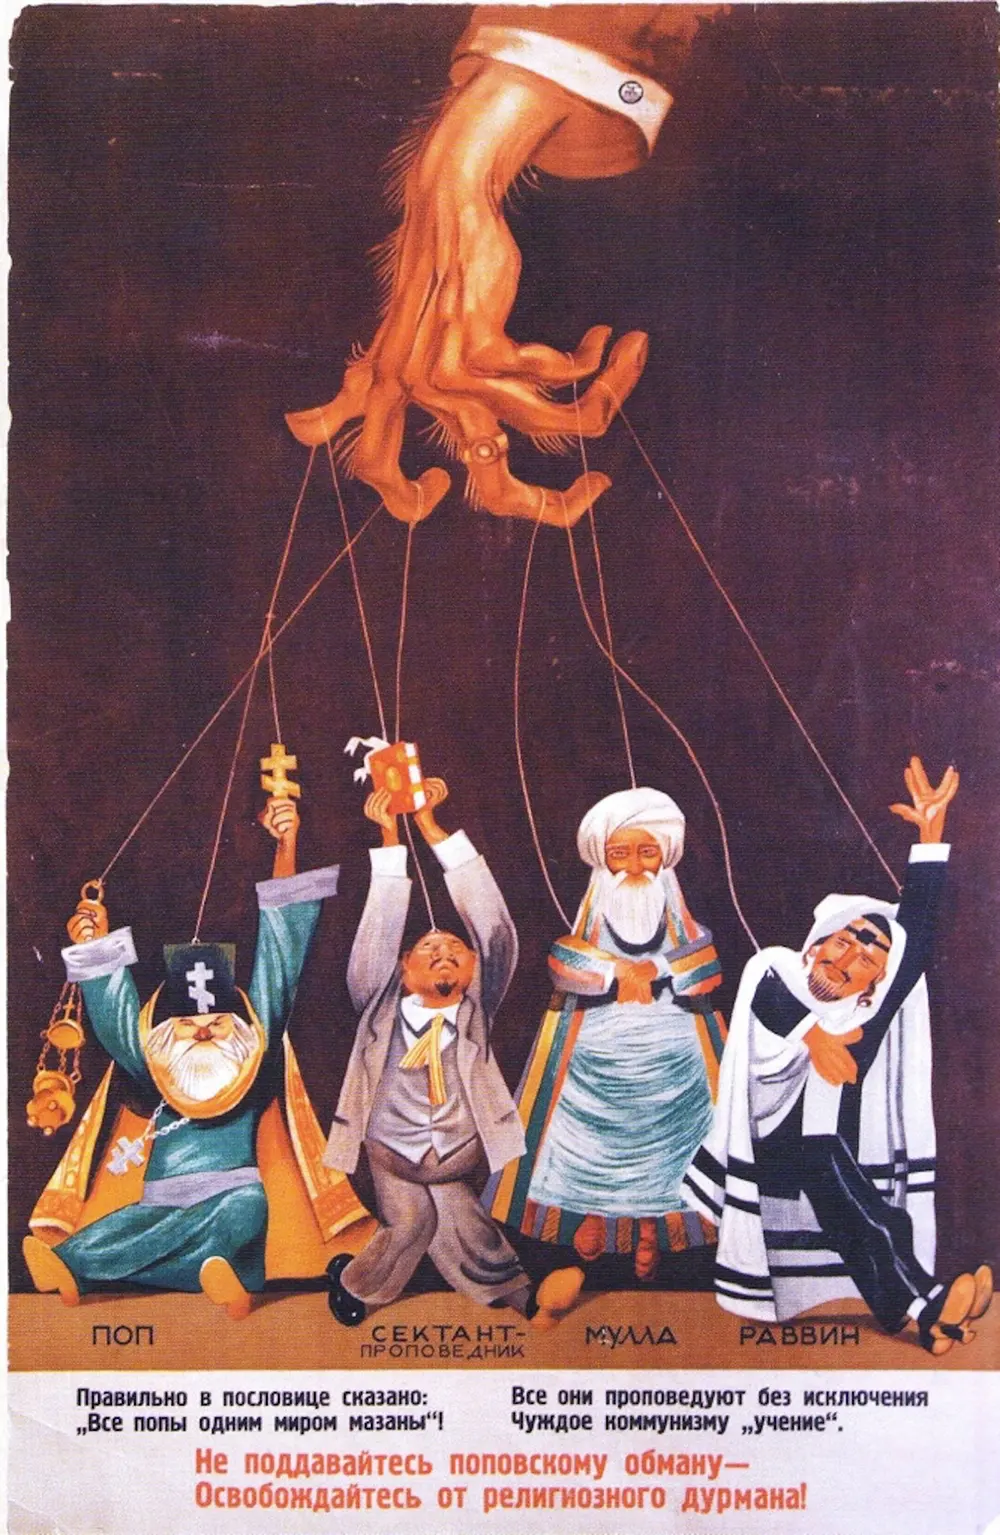 soviet antireligious propaganda posters